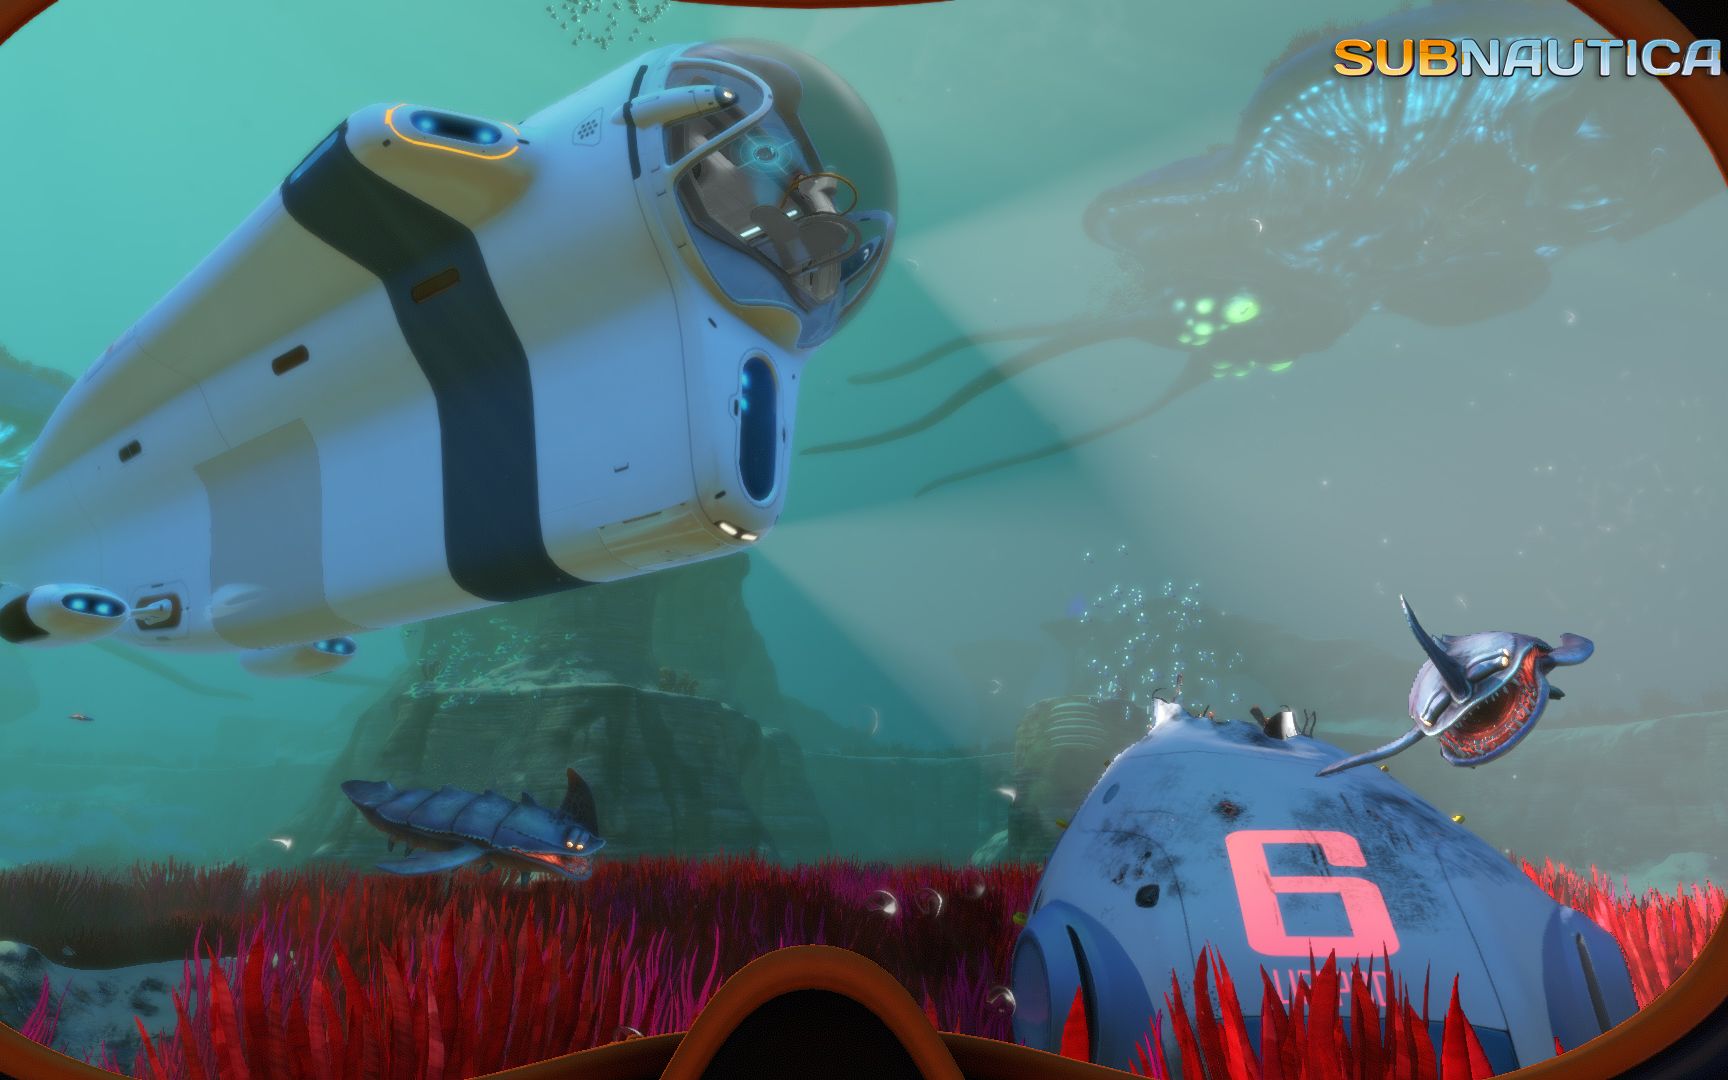 subnautica 深海迷航 美丽水世界  终于有独眼巨人号了